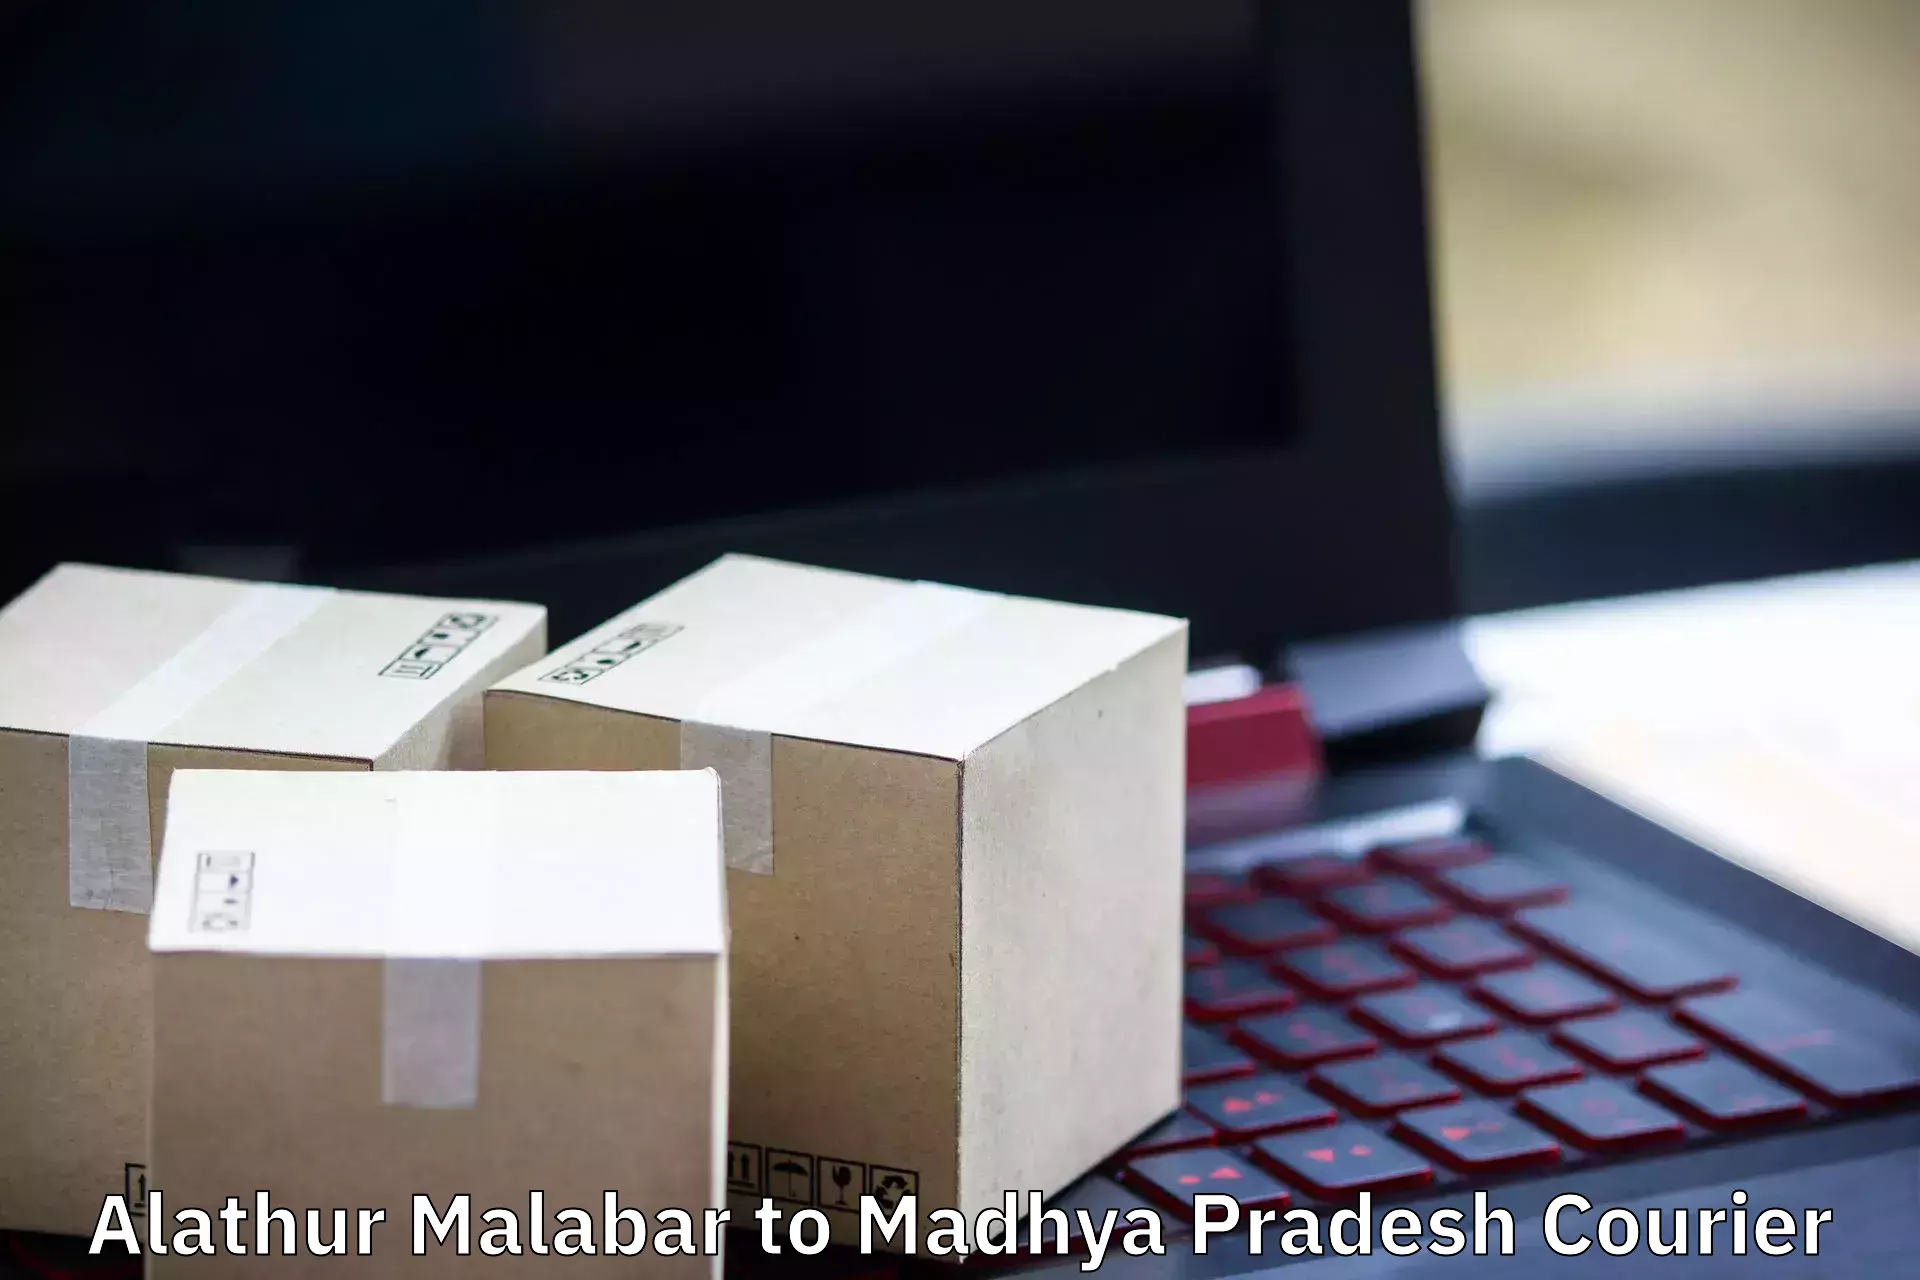 Furniture delivery service Alathur Malabar to Depalpur